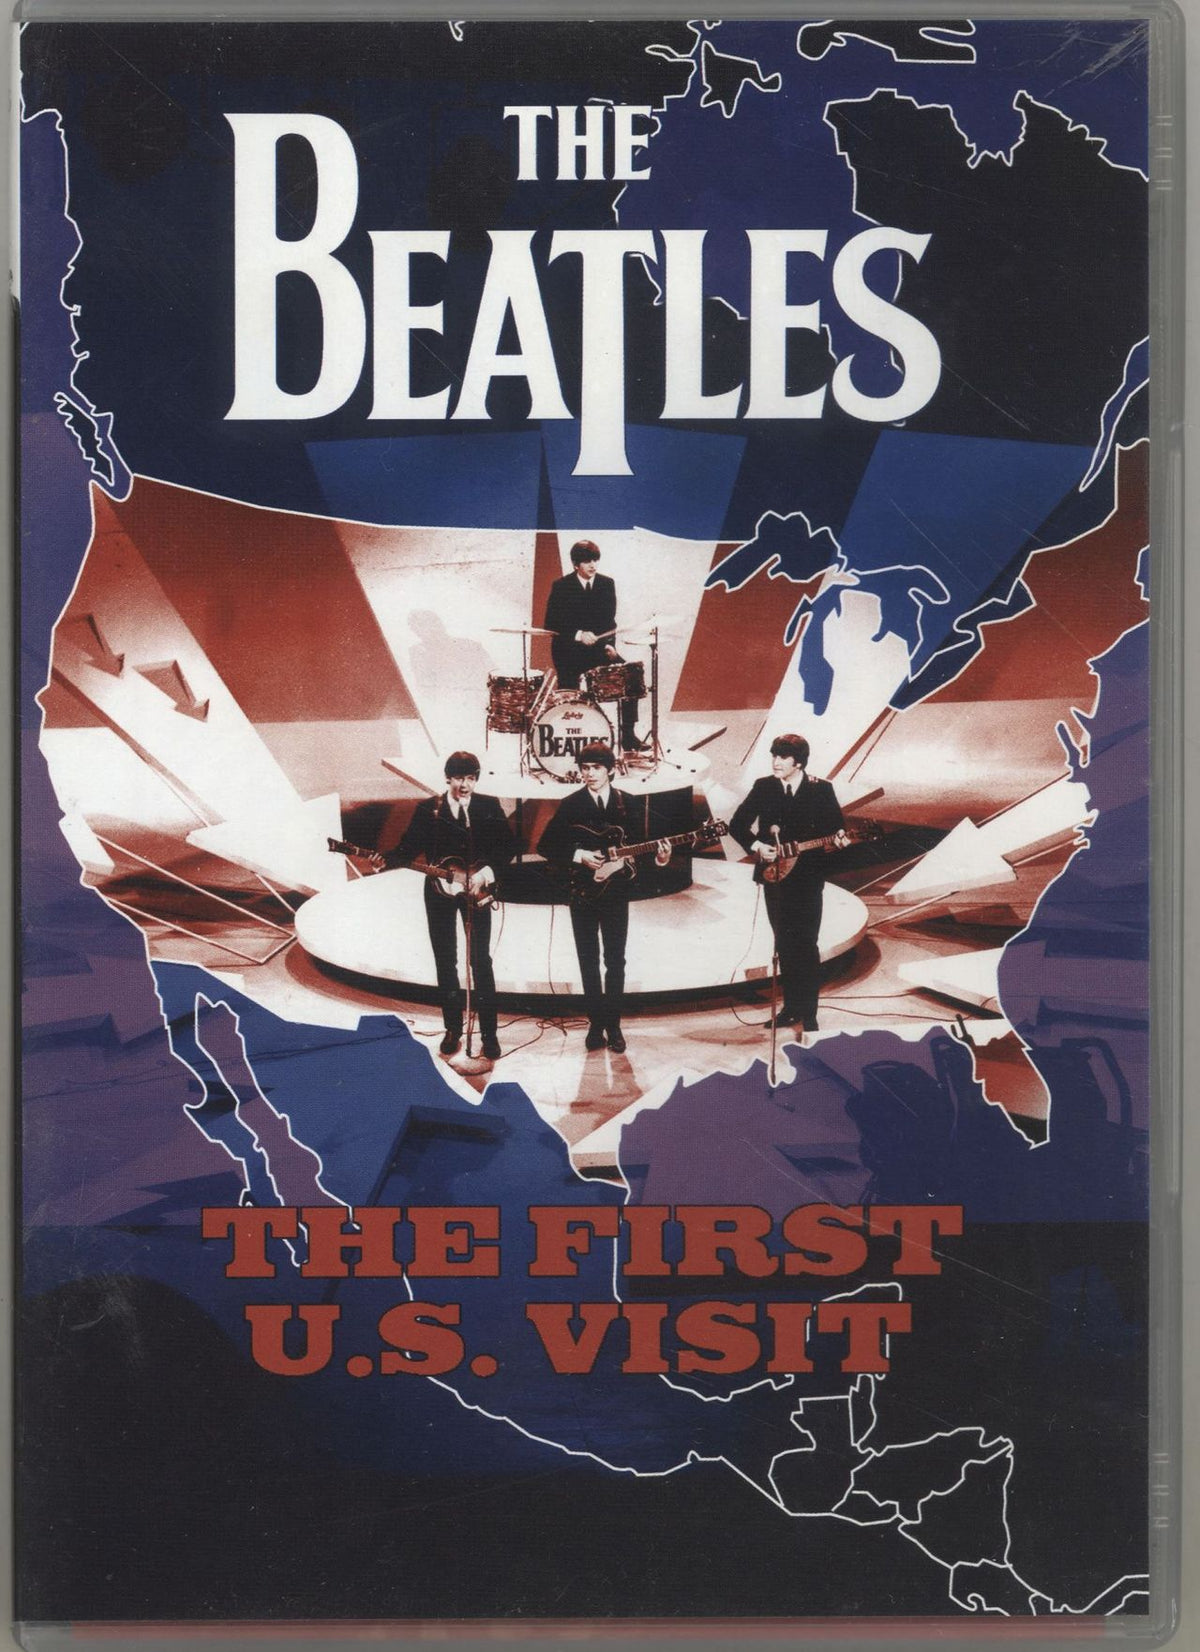 The Beatles The First U.S Visit UK DVD — RareVinyl.com